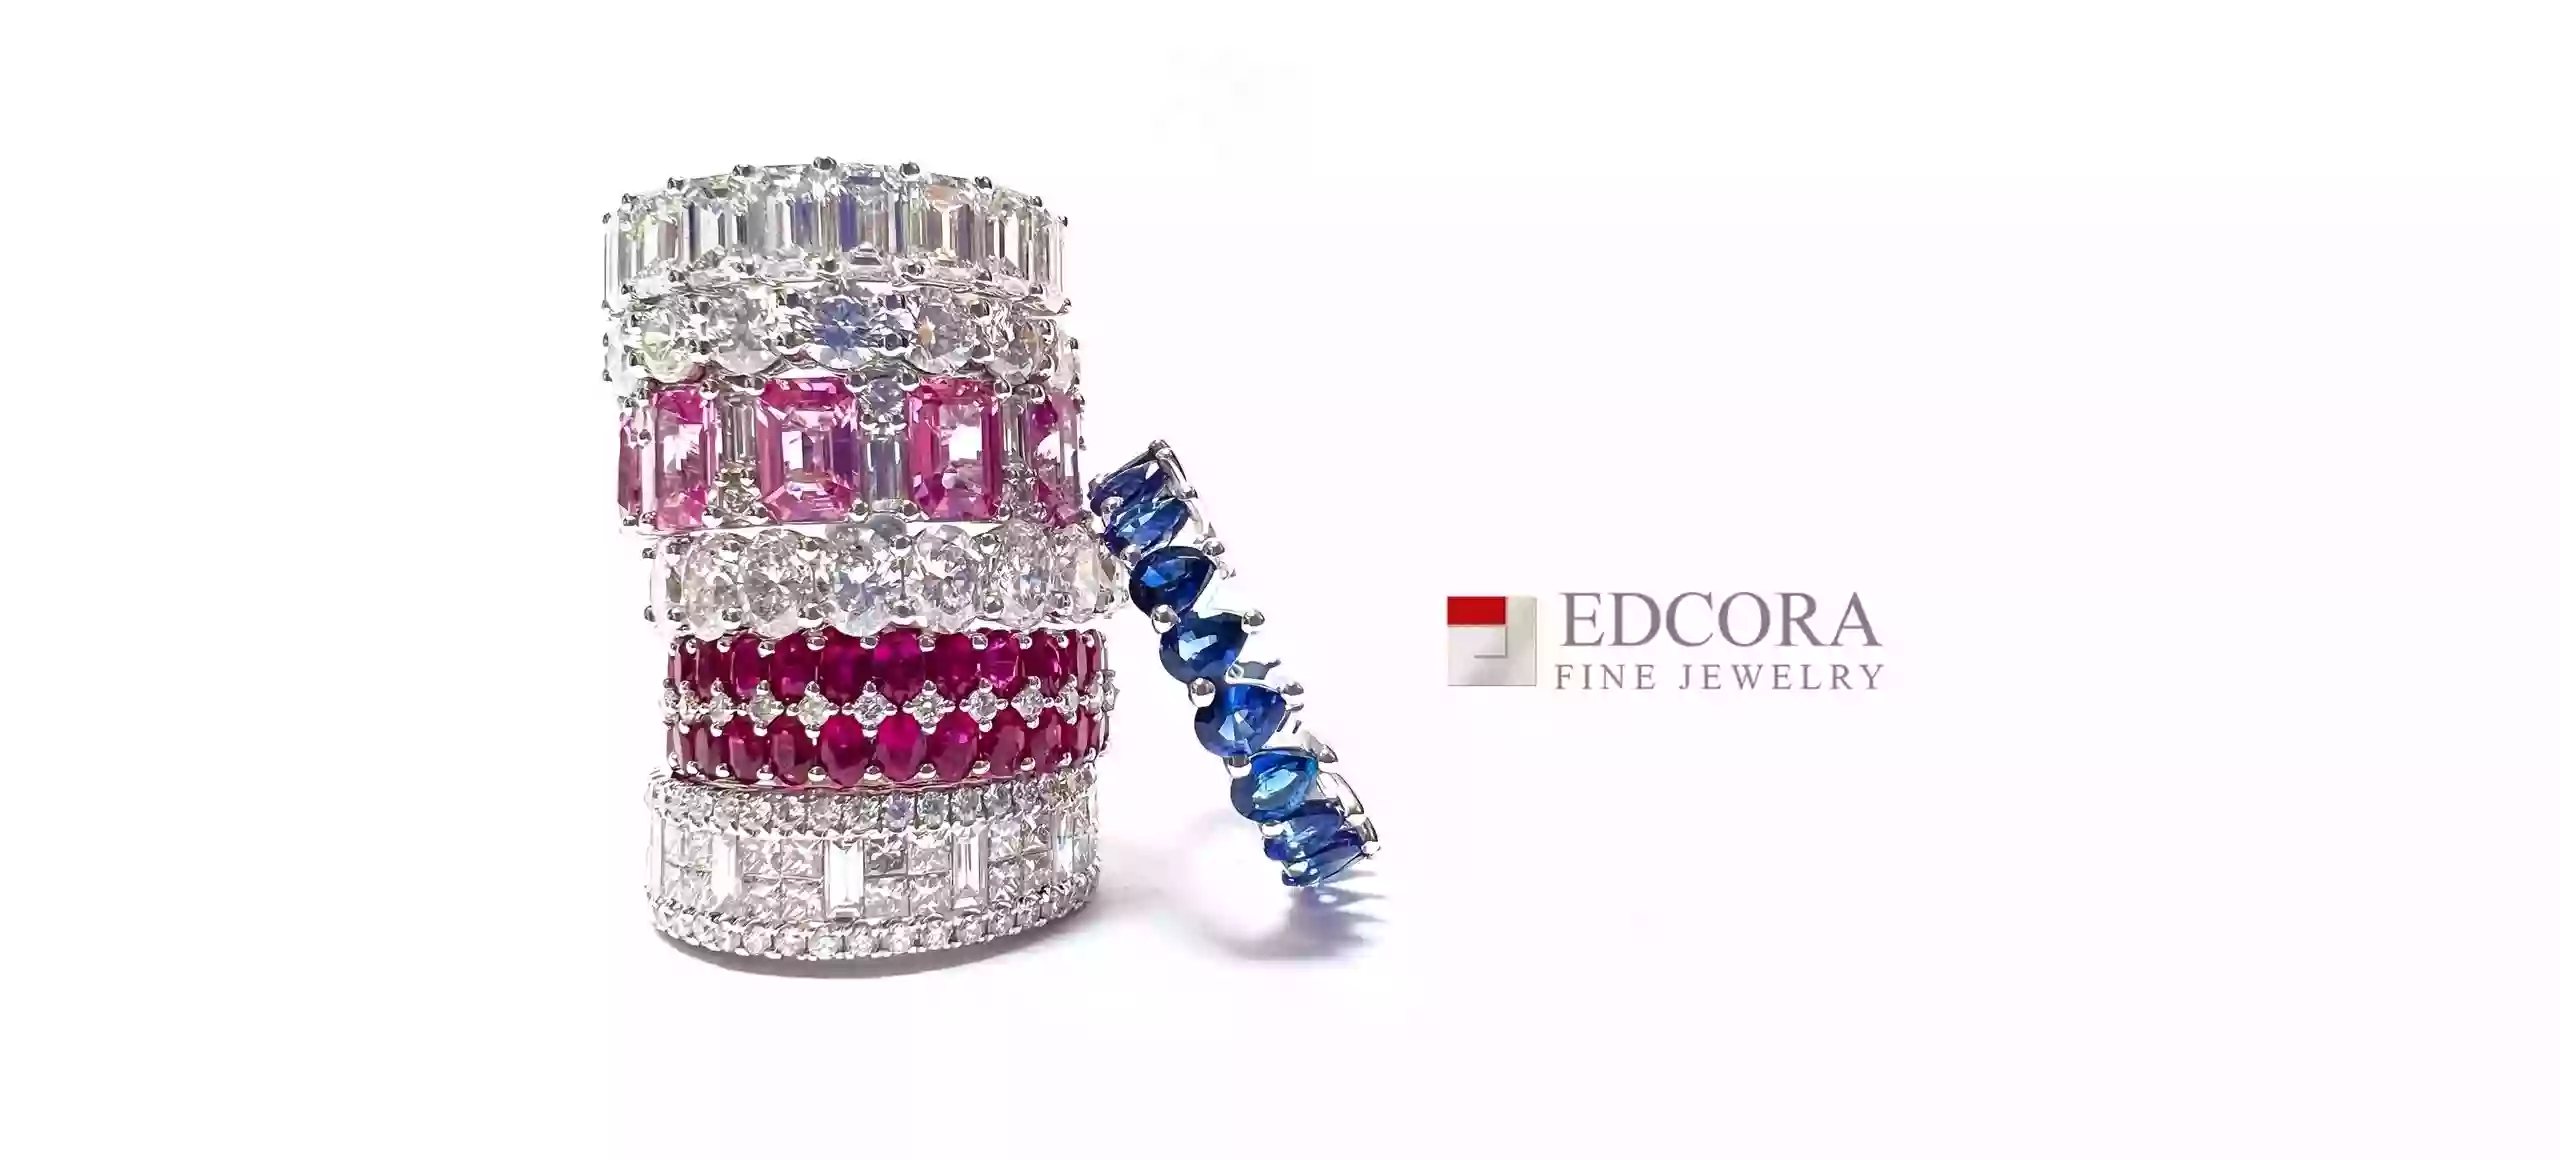 Edcora Fine Jewelry